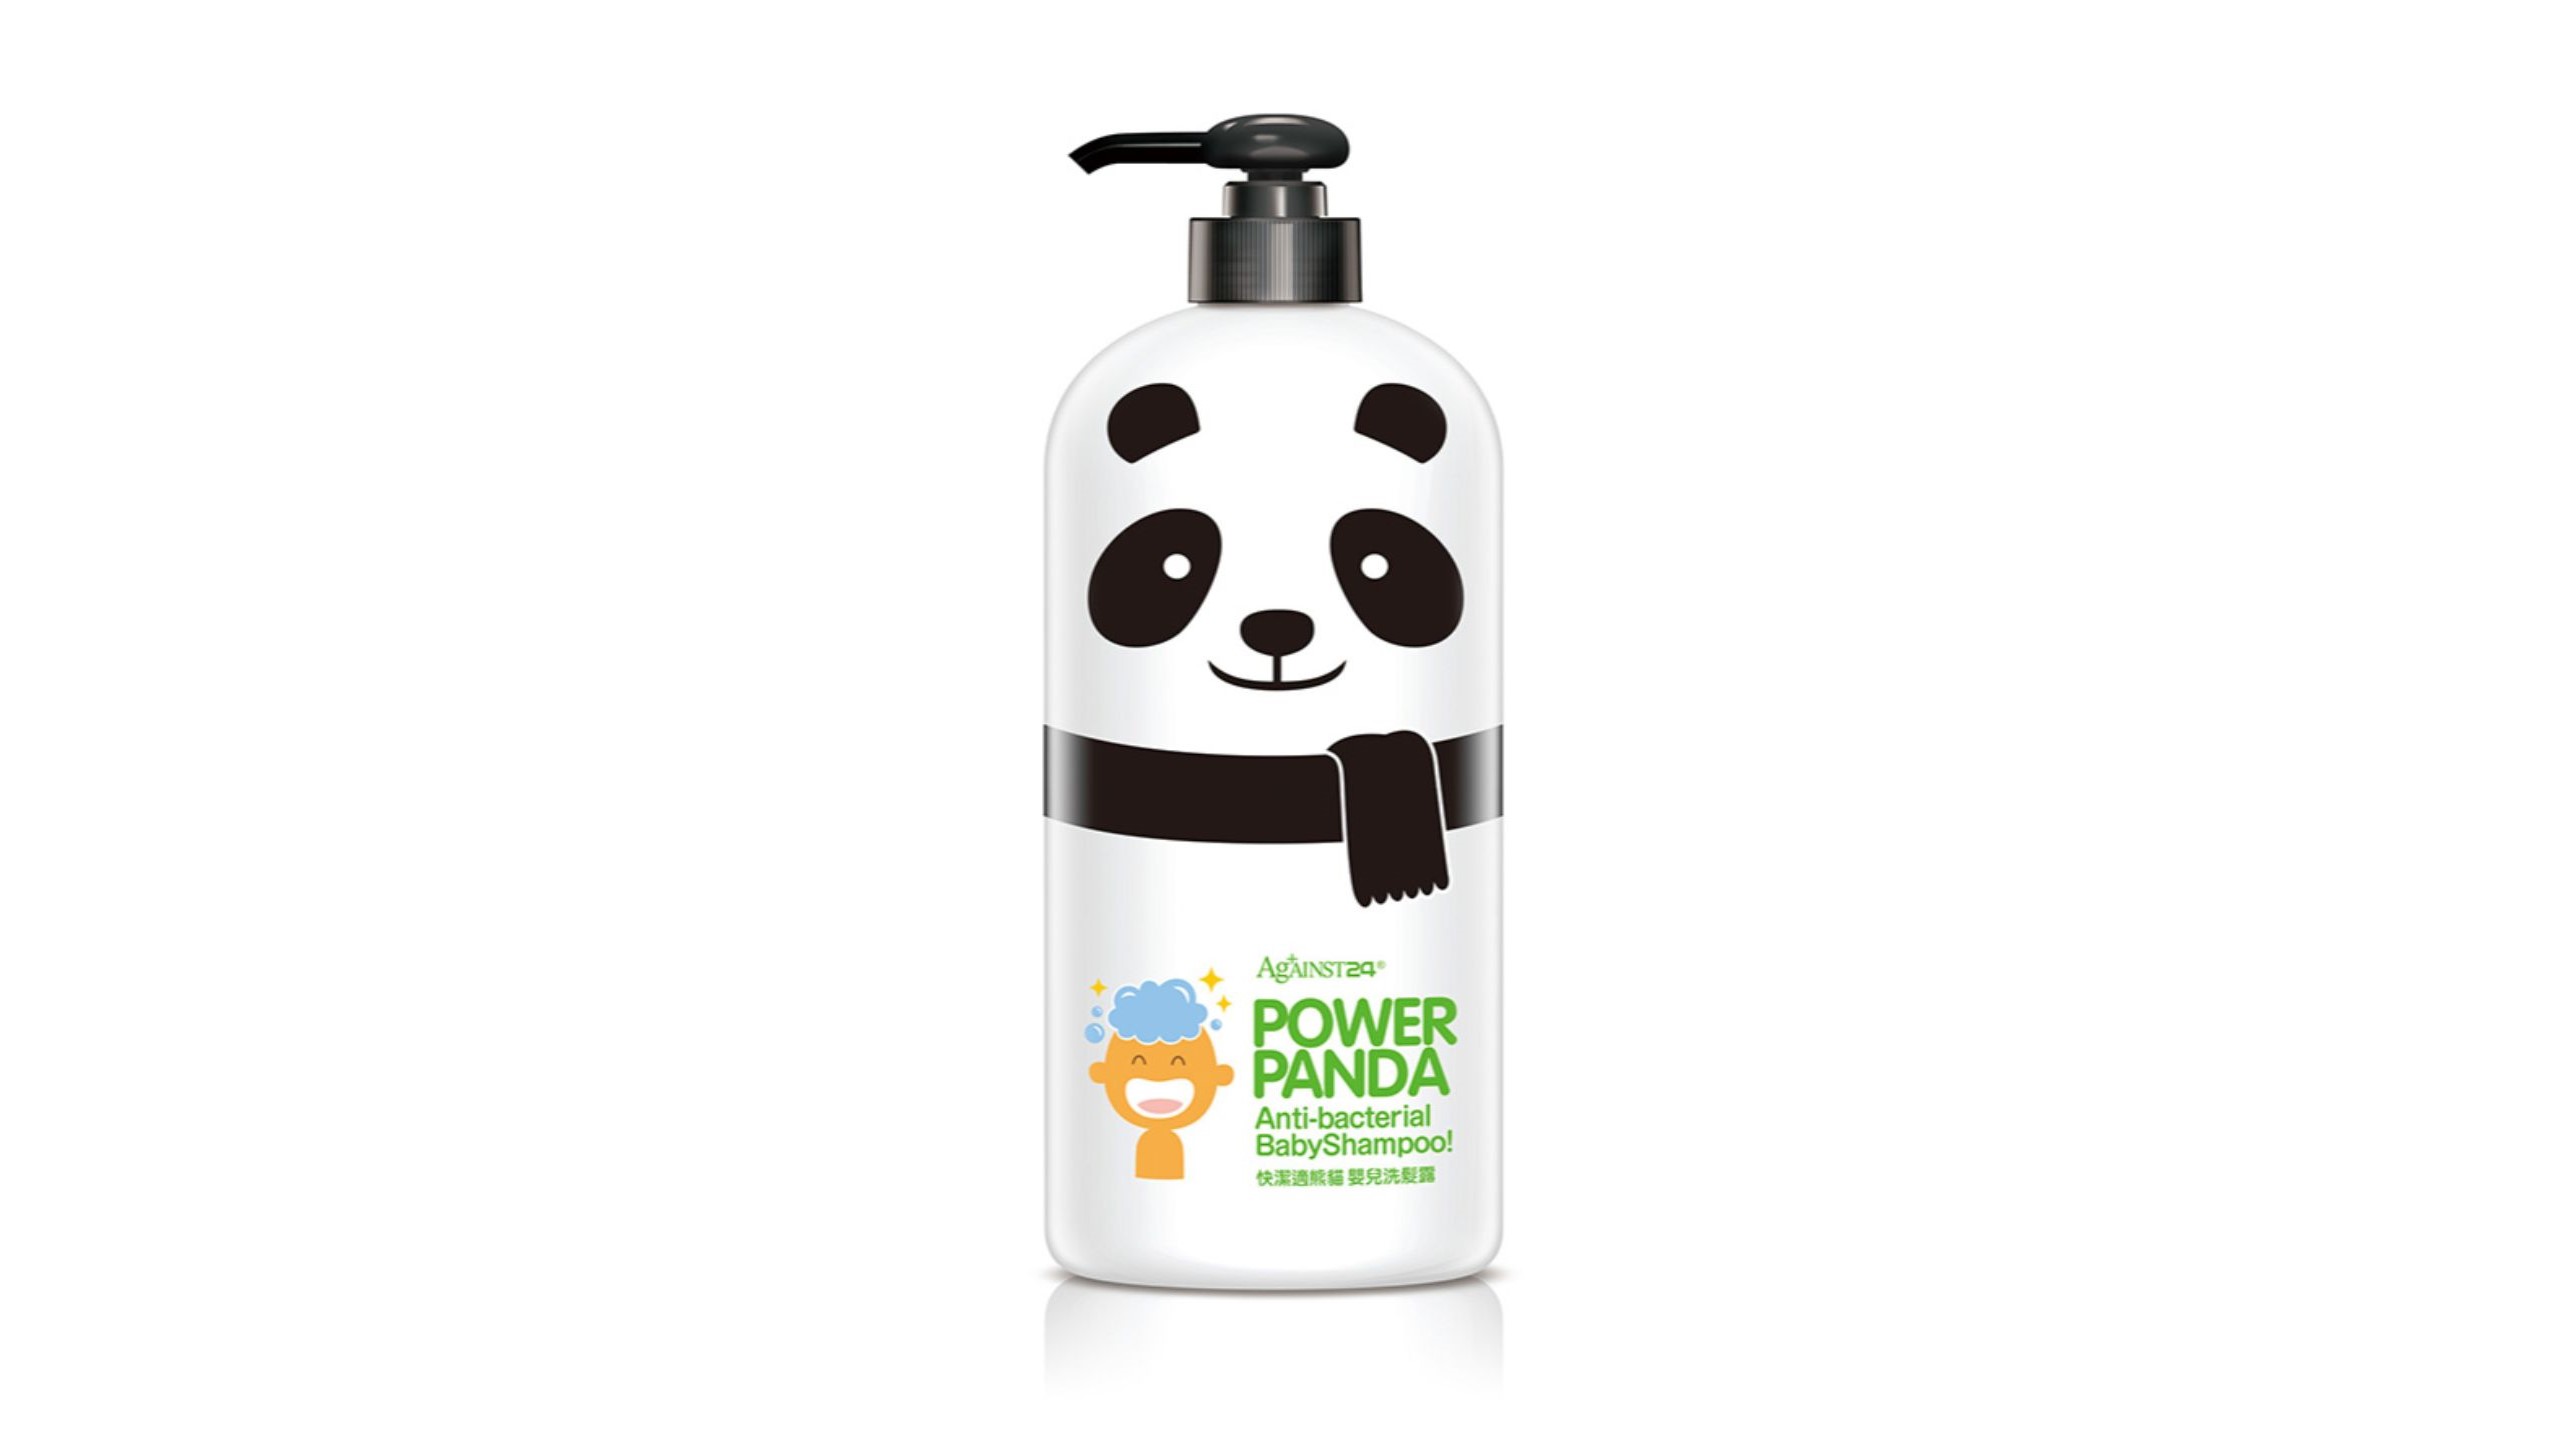 Against24 Power Panda Anti-Bacterial Baby Shampoo 650ml